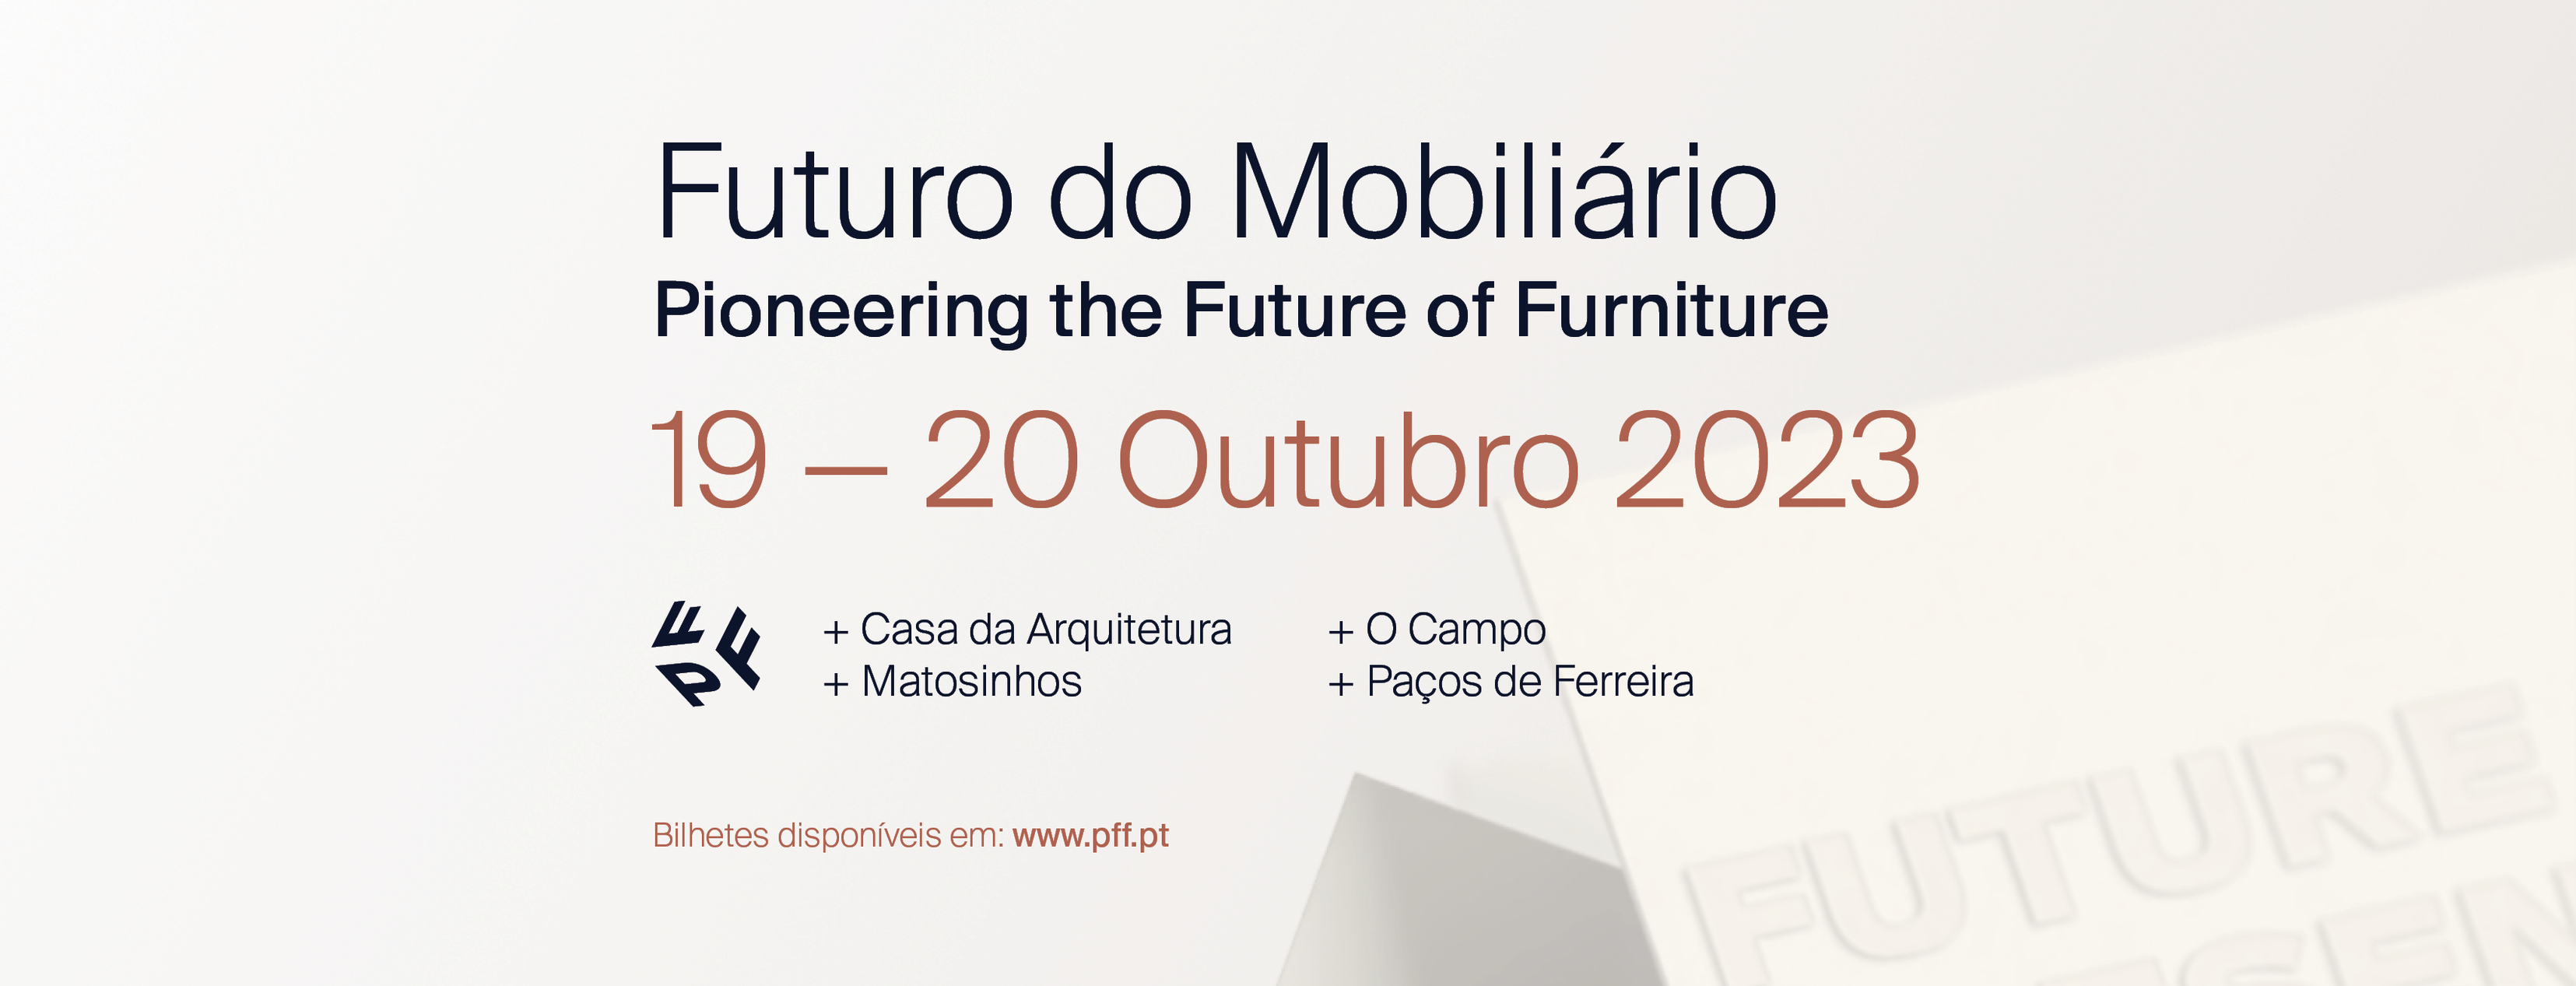 Futuro do Mobiliário - Pioneering the Future of Furniture (PFF)